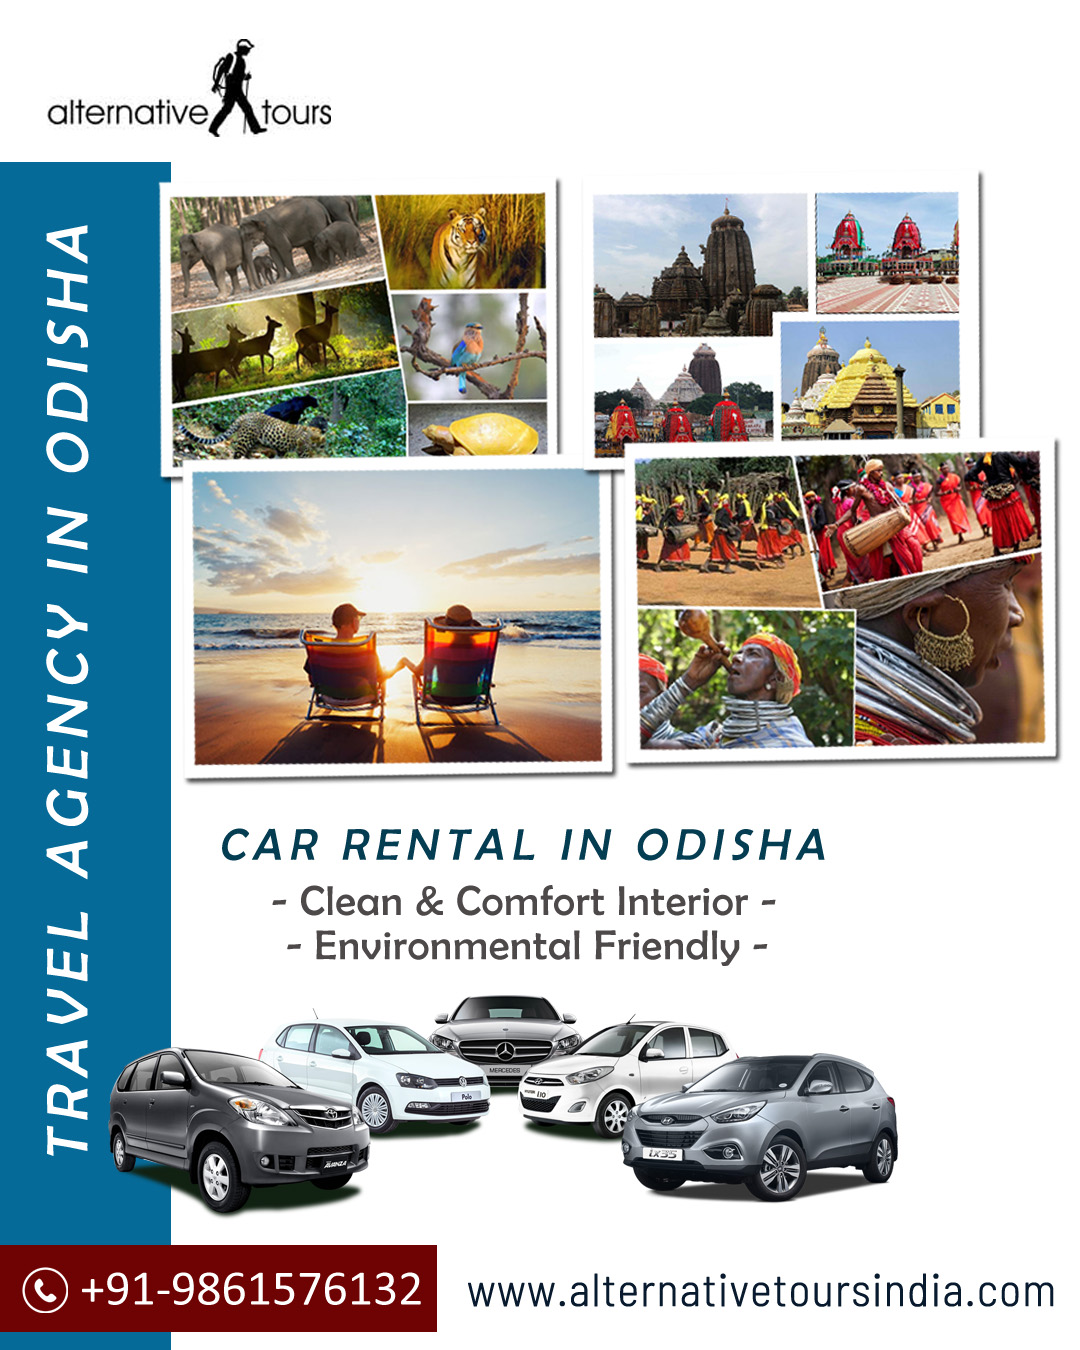 Travel agency in odisha